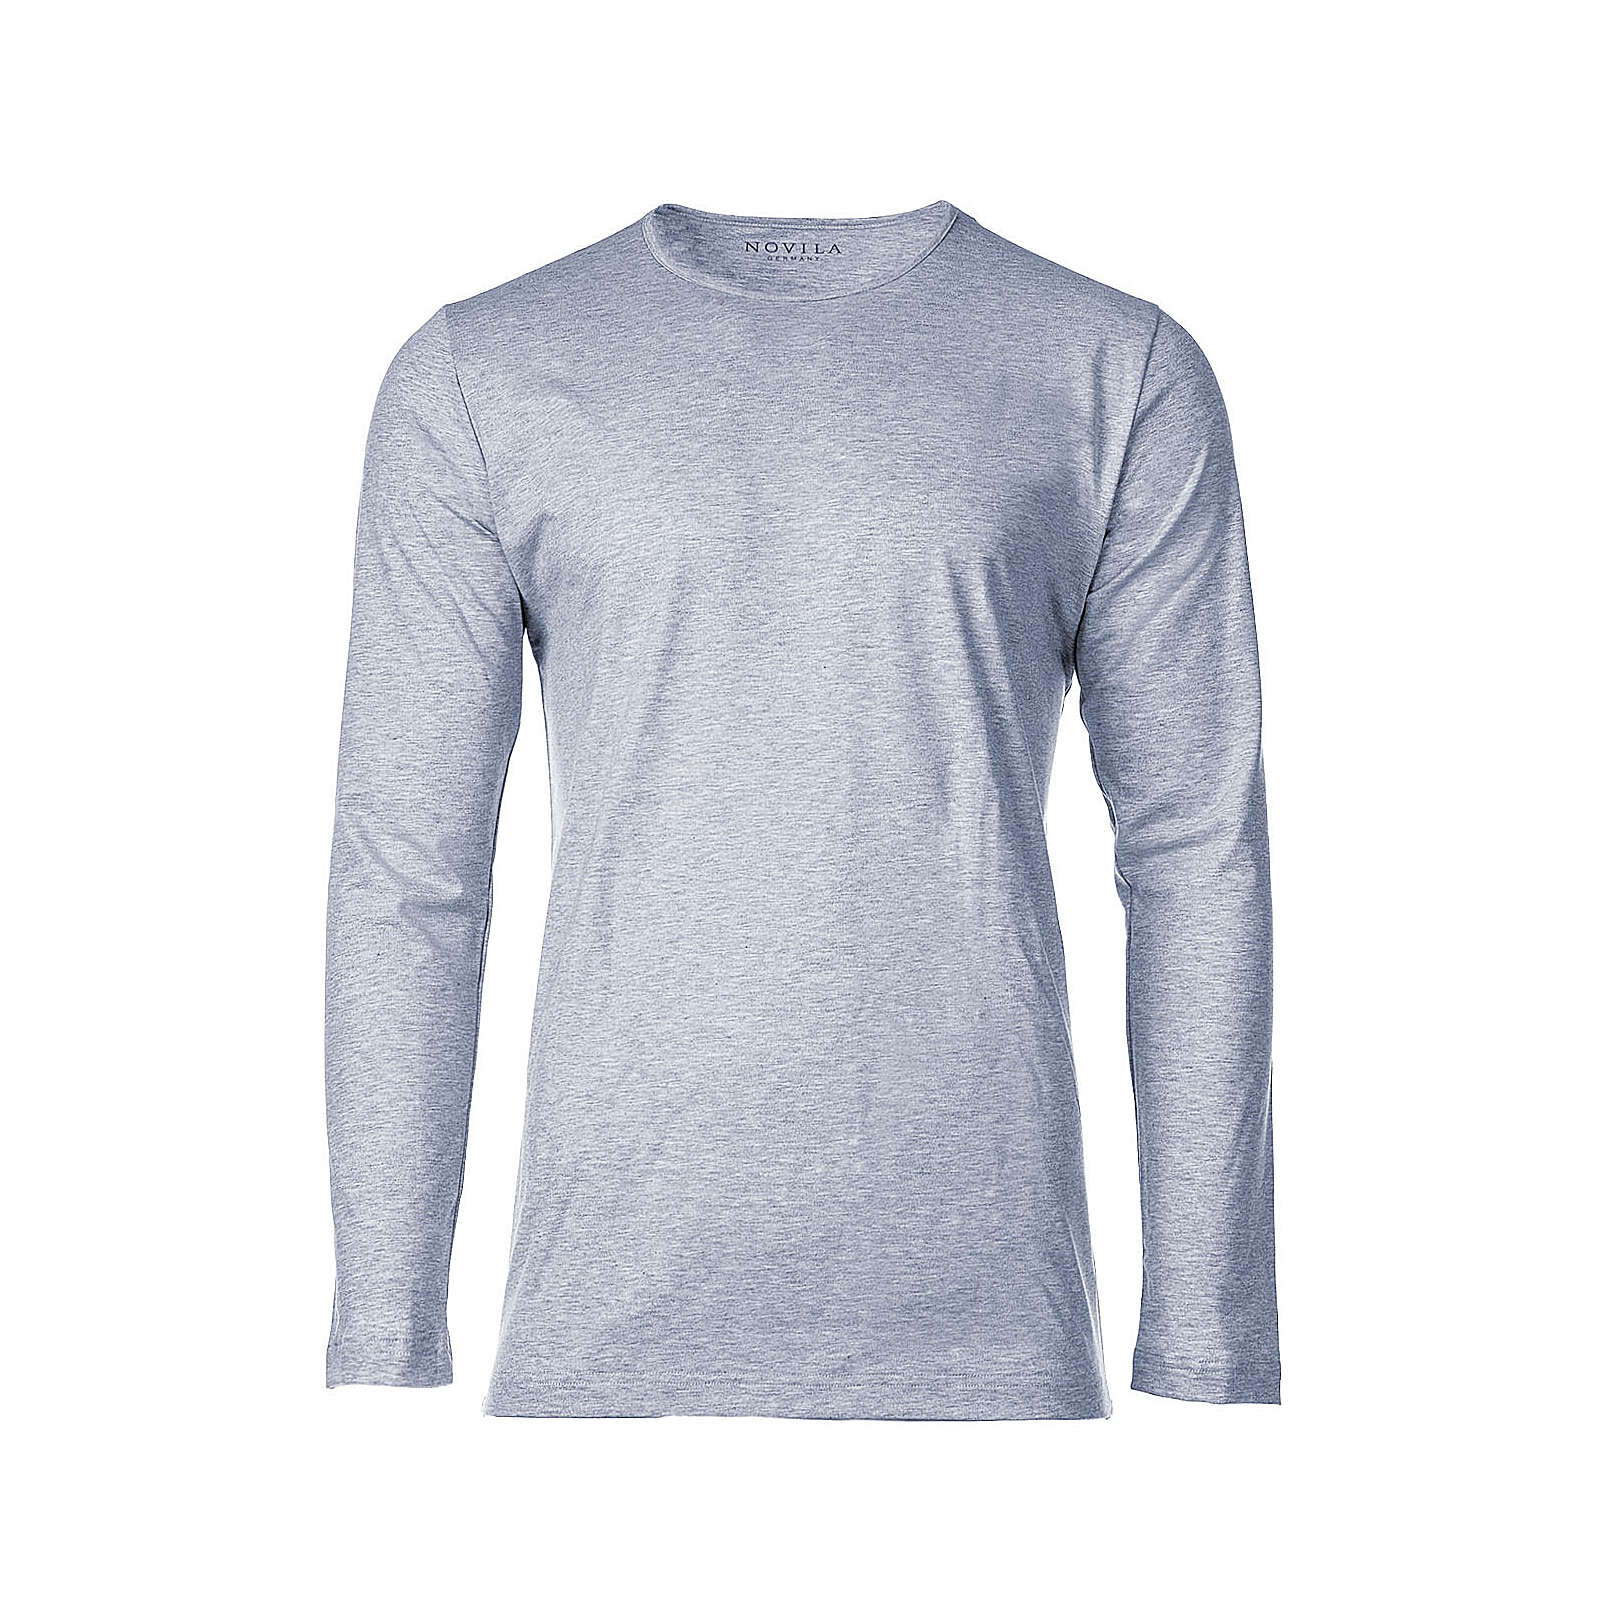 Image of NOVILA Herren Shirt langarm - Loungewear Rundhals 1/1 Arm Cotton einfarbig Sweatshirts hellblau Herren Gr. 38